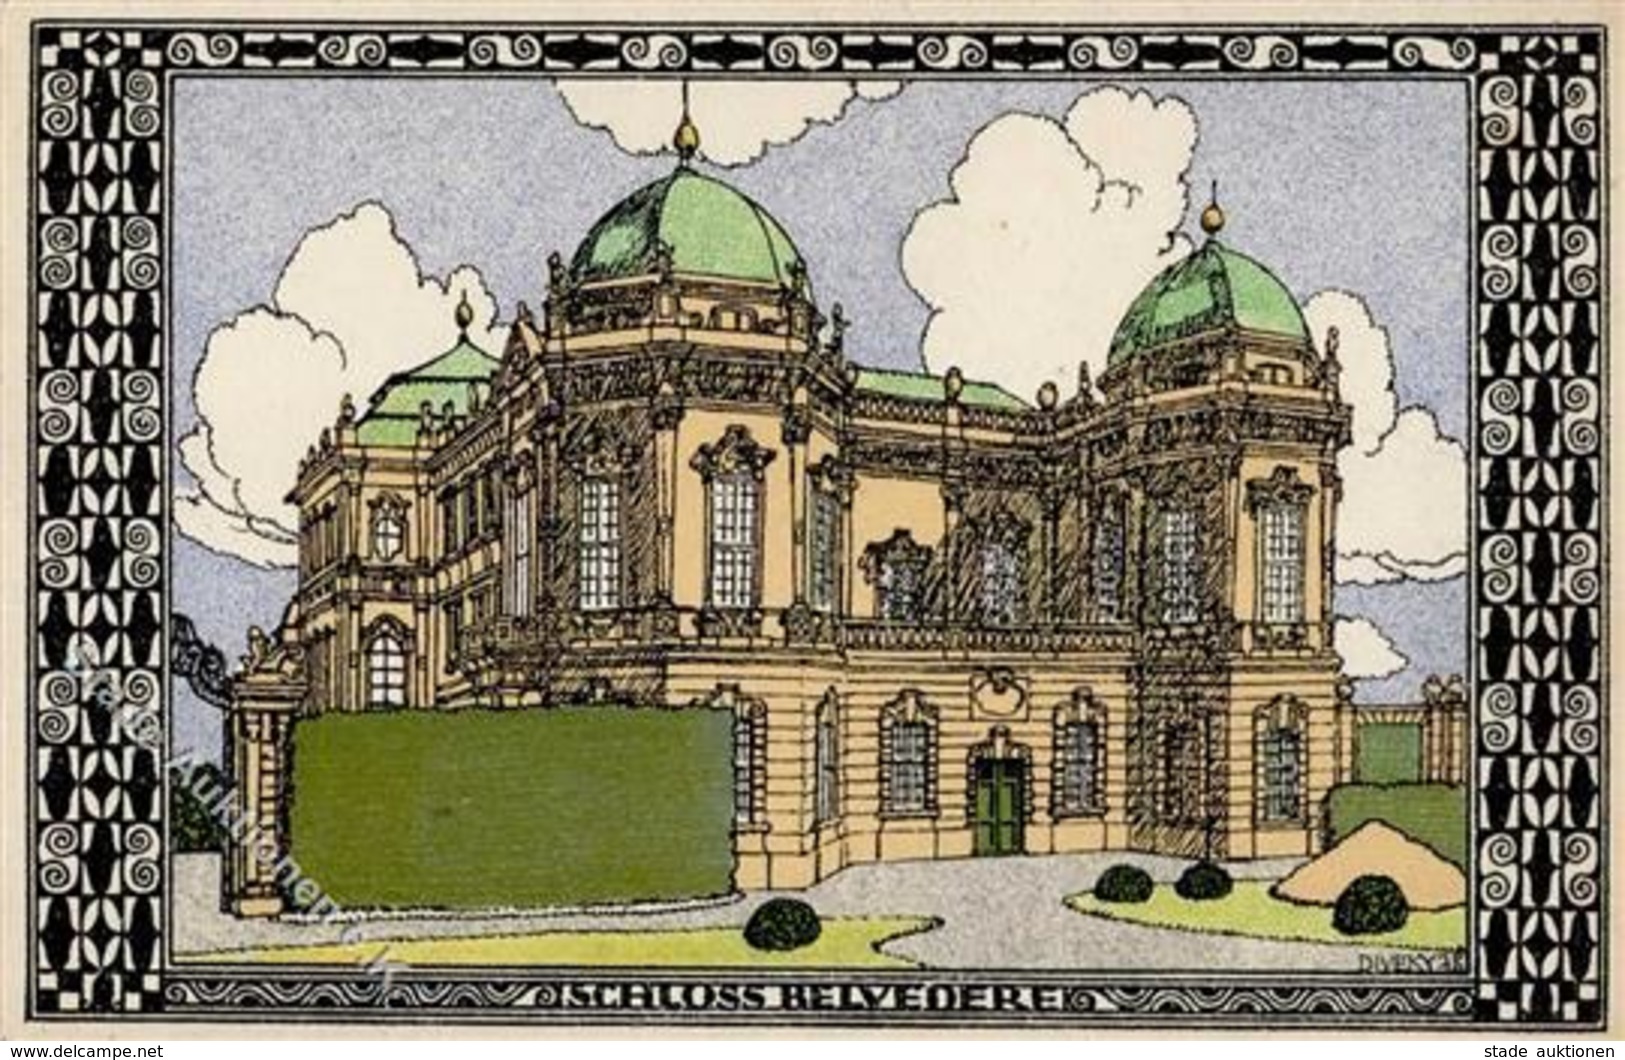 Wiener Werkstätte Nr. 317 Diveky, Josef Belvedere Palace Künstler-Karte I- - Kokoschka